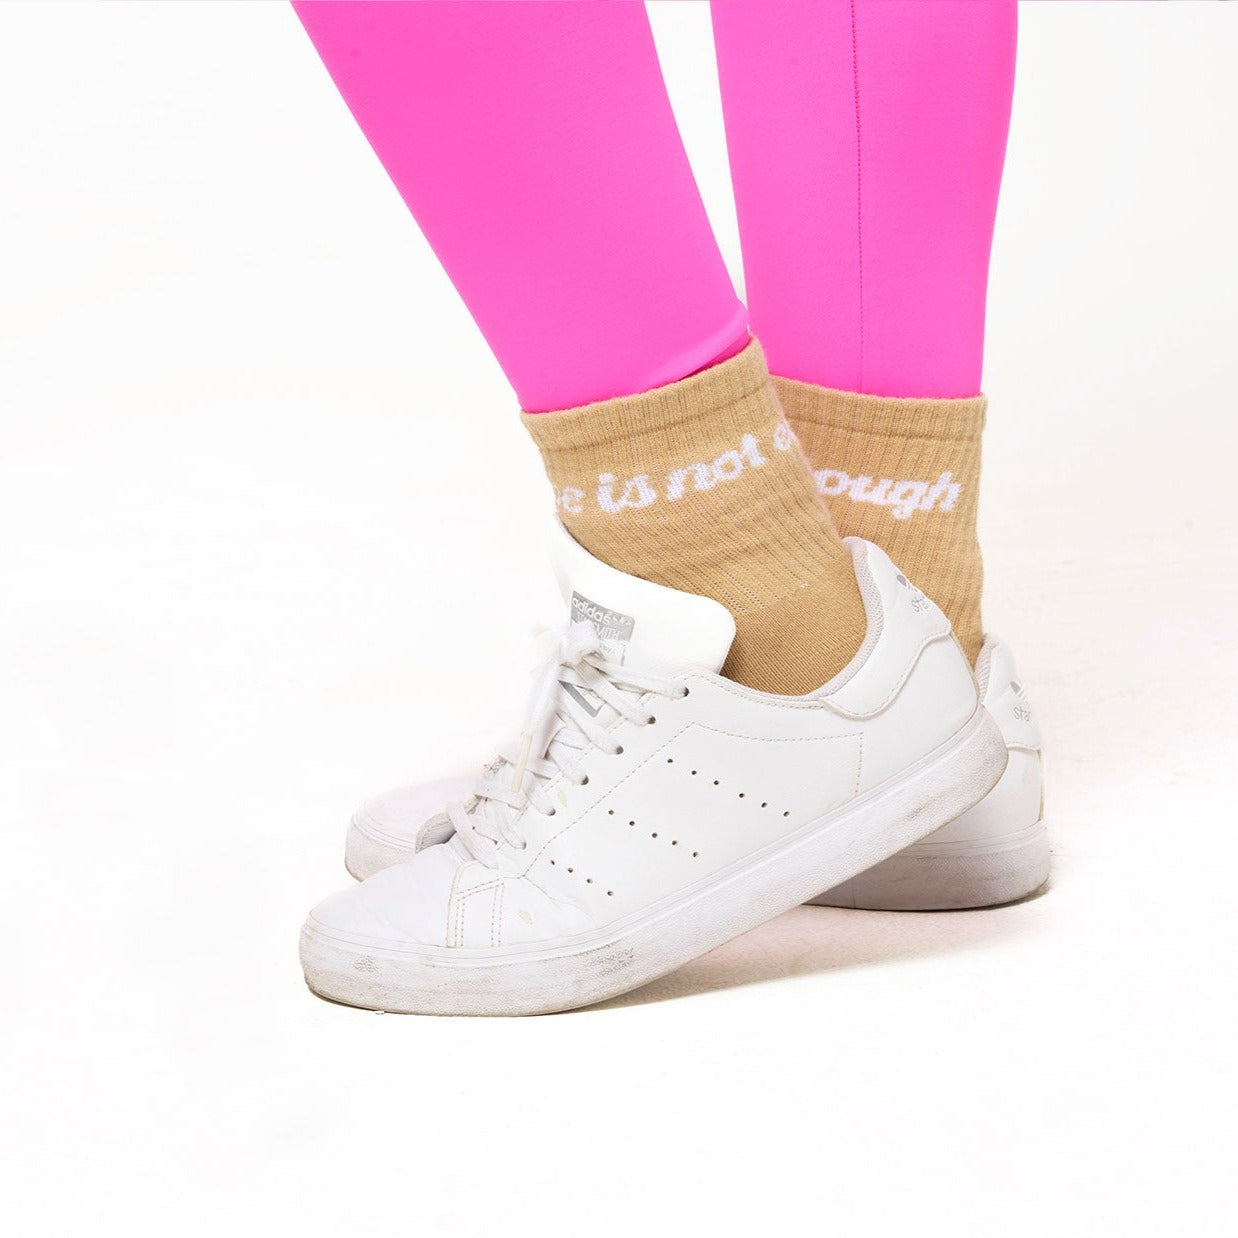 A-MORE Gym Socks